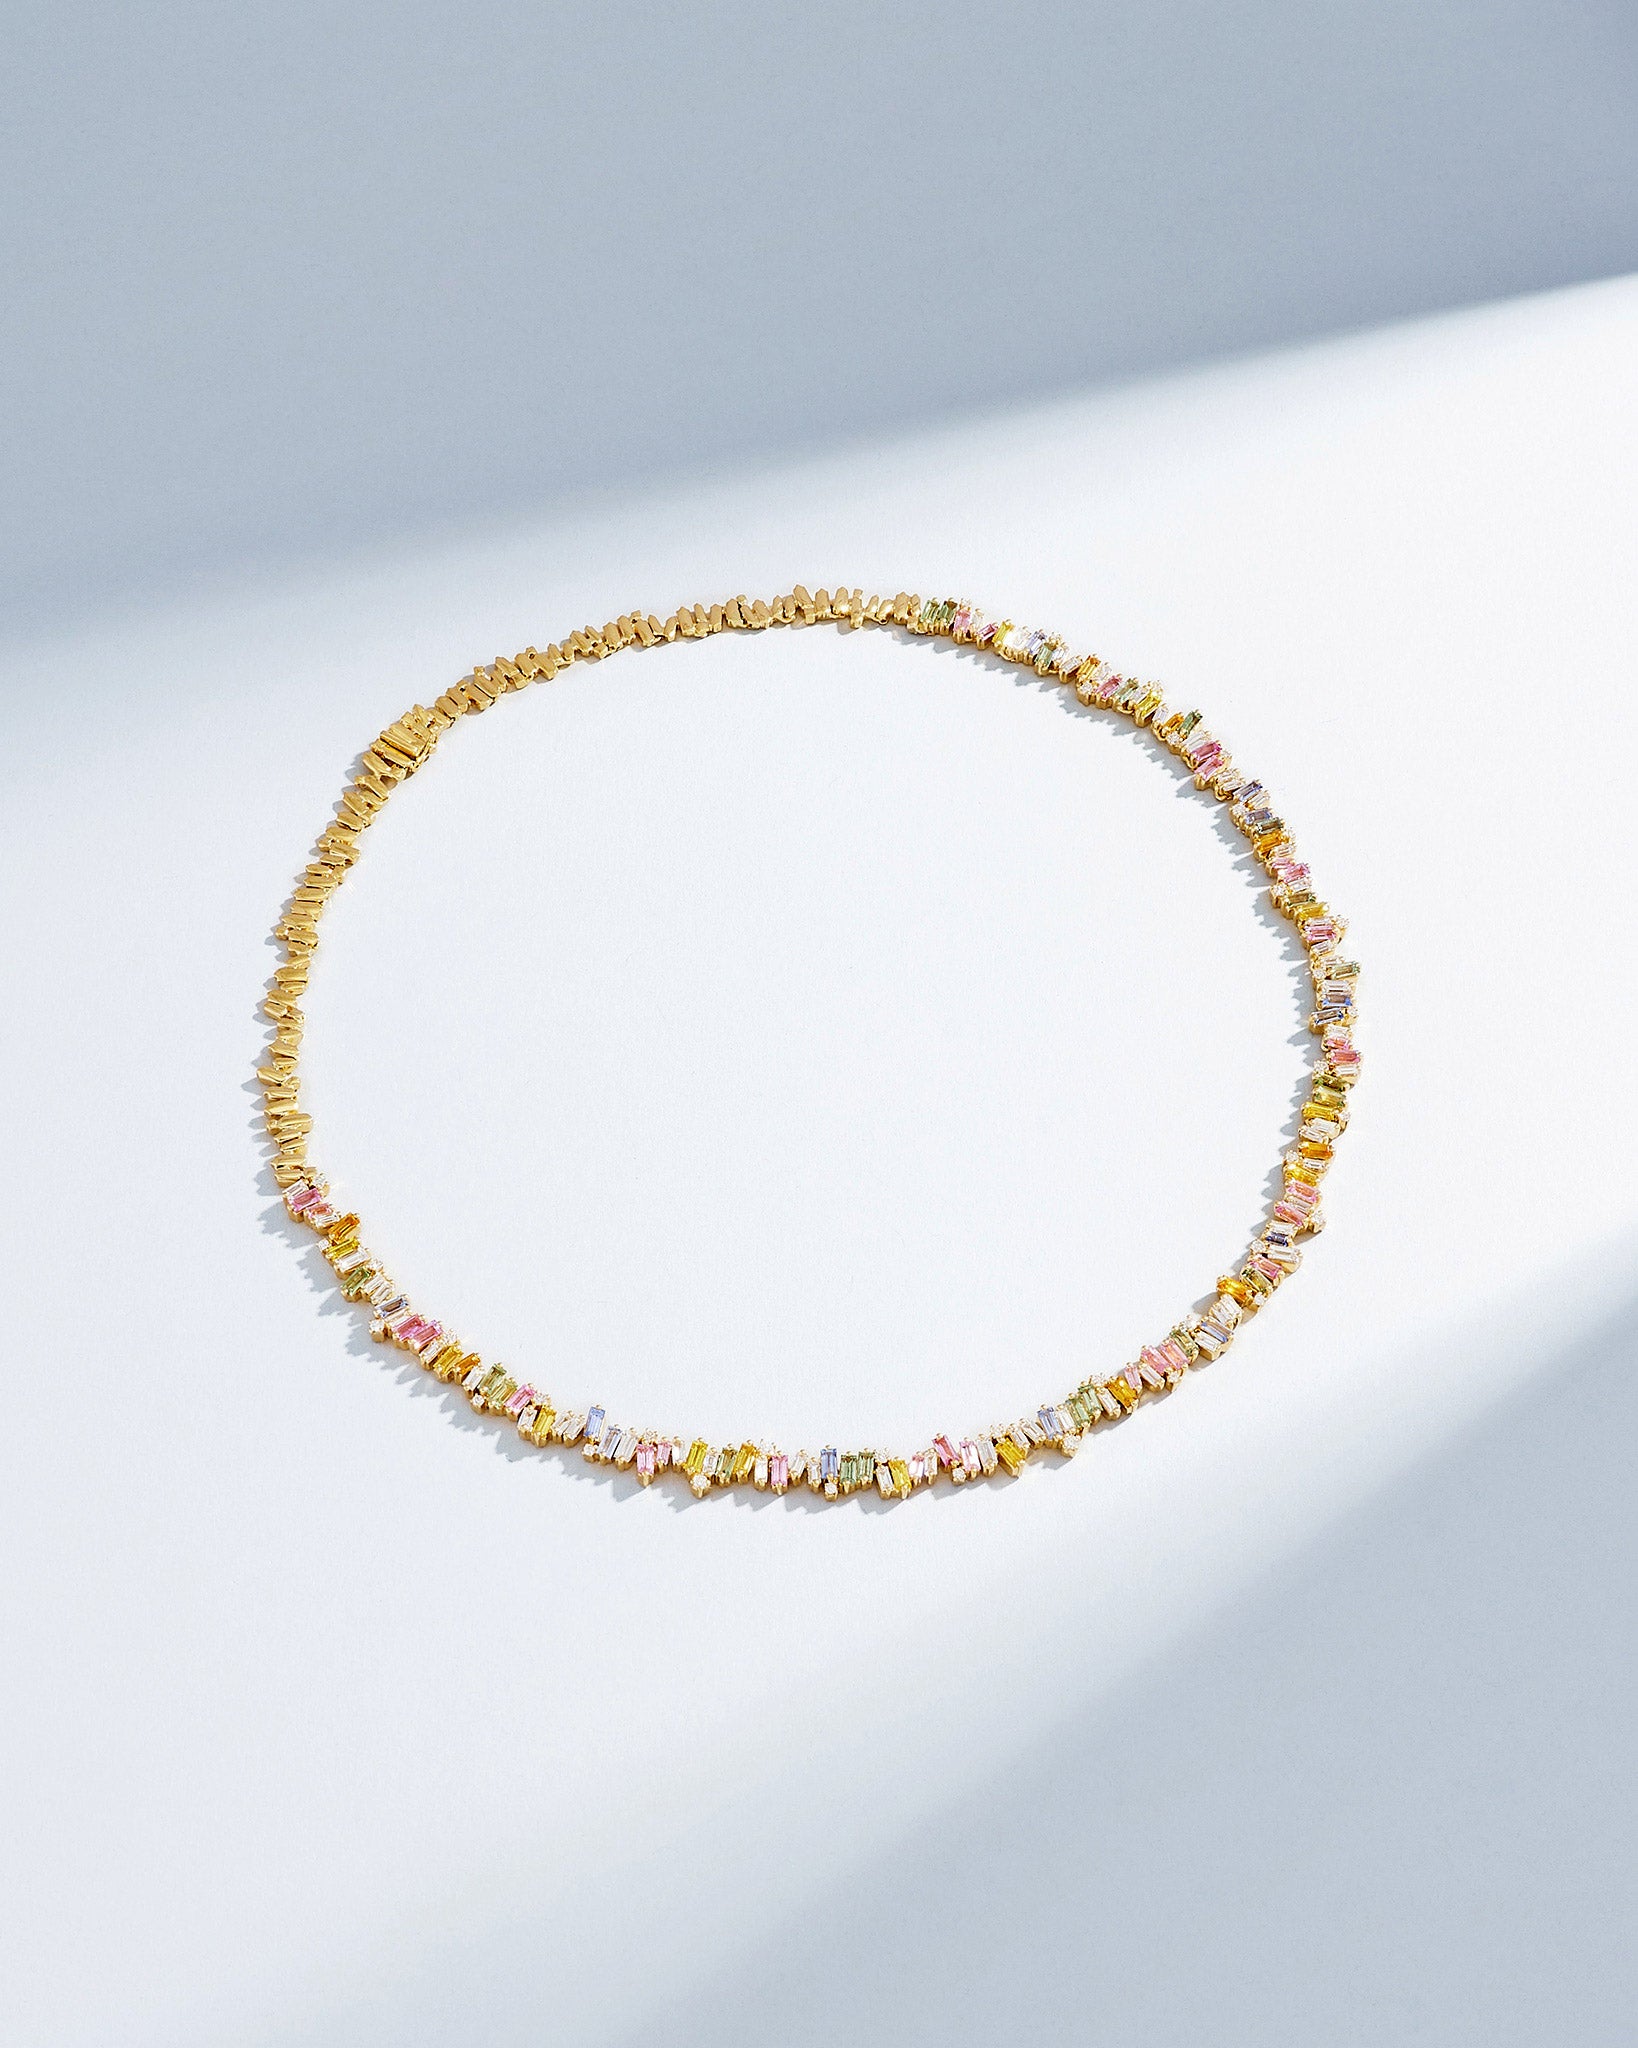 Suzanne Kalan Bold Burst Pastel Sapphire Tennis Necklace in 18k yellow gold